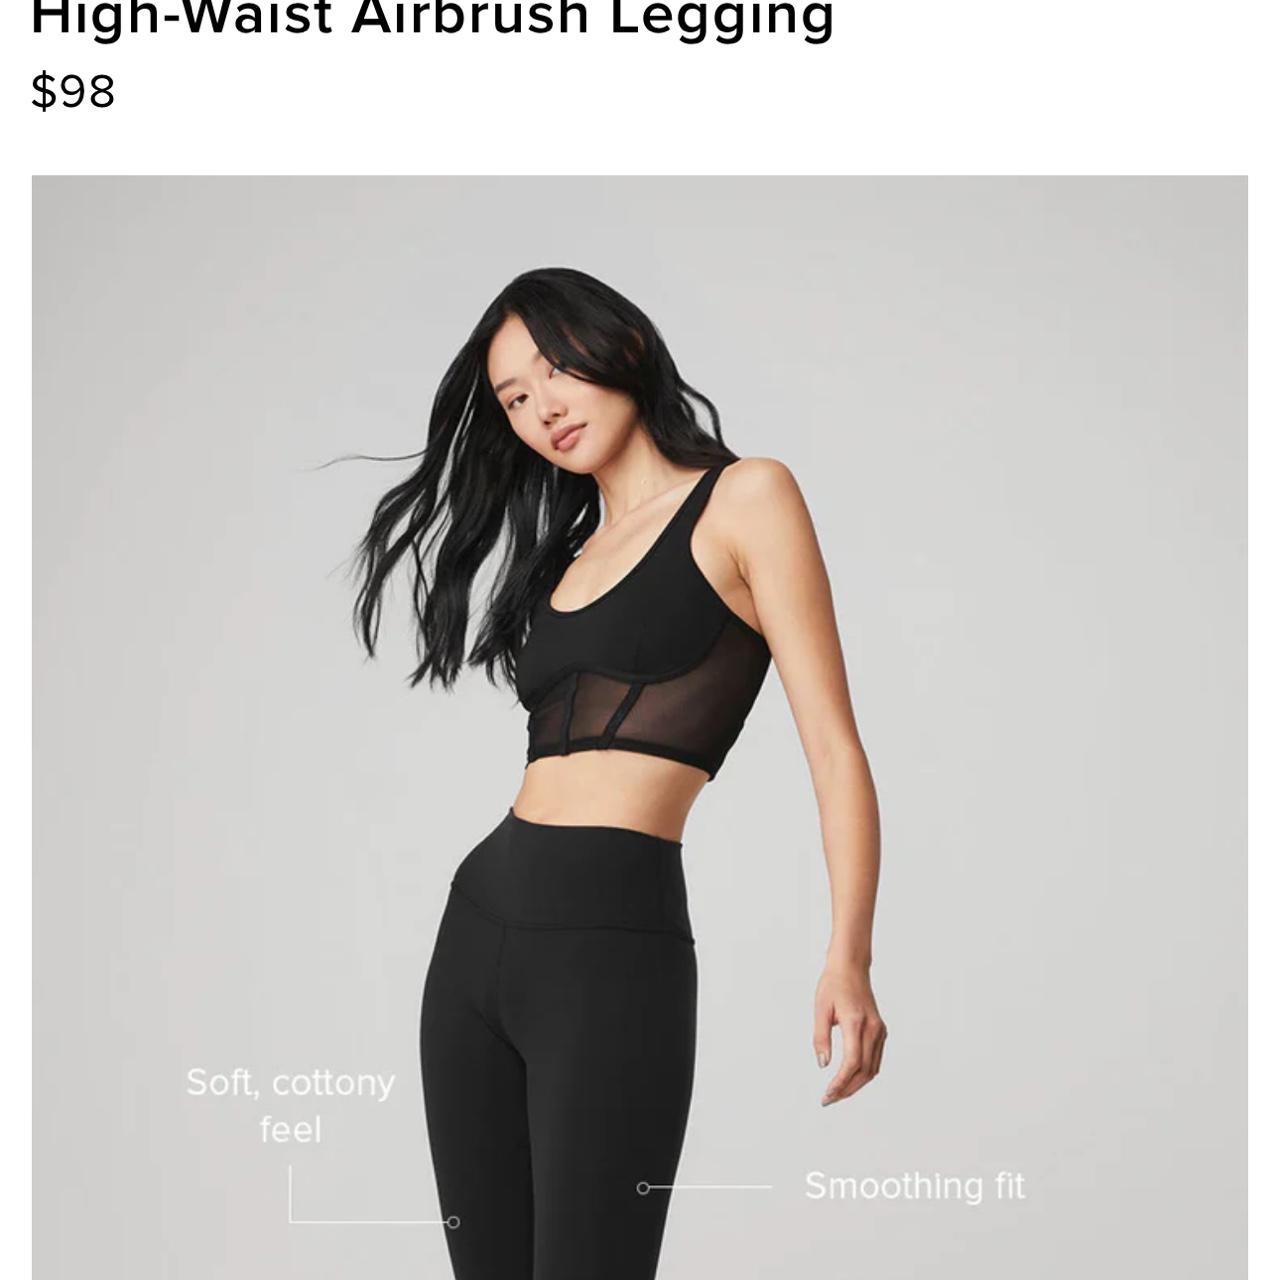 Alo Yoga High-Waist Airbrush Leggings